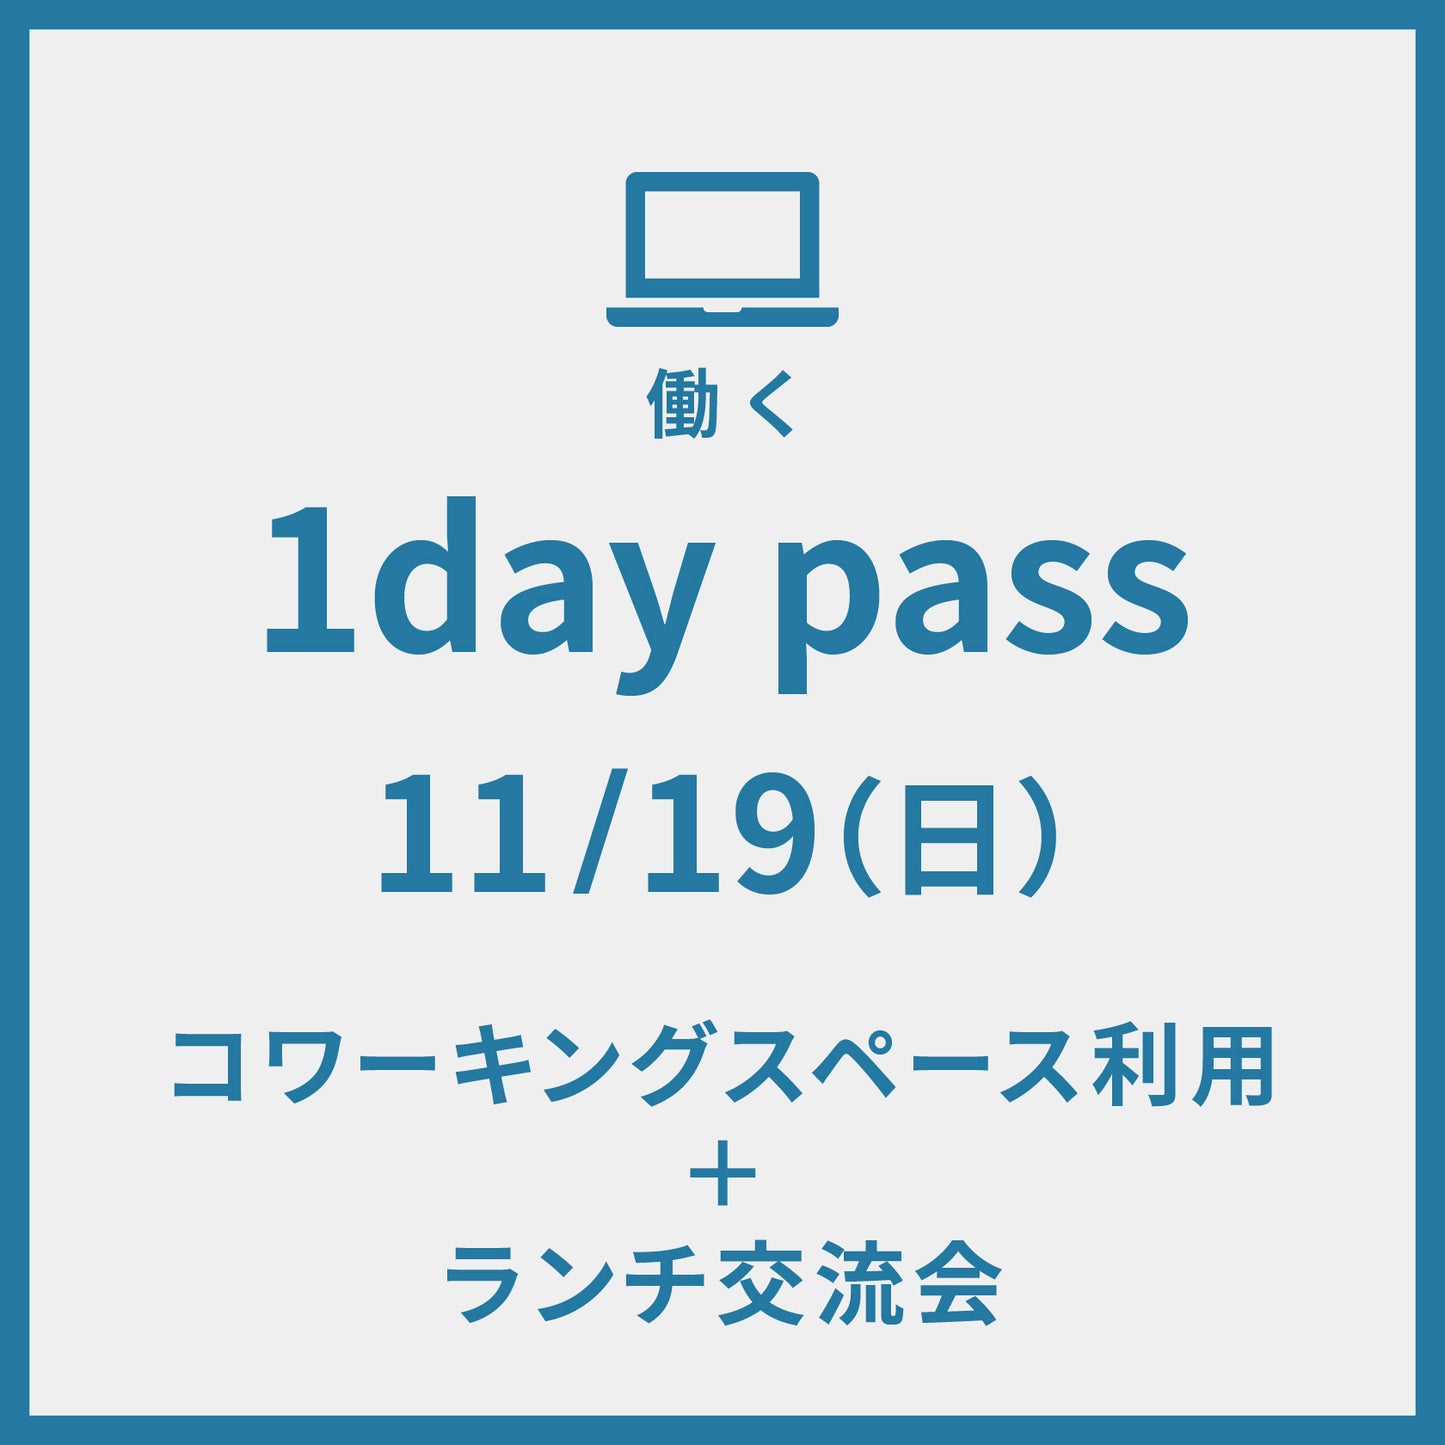 1day pass 11/19 コワーキングスペース利用＋ランチ交流会